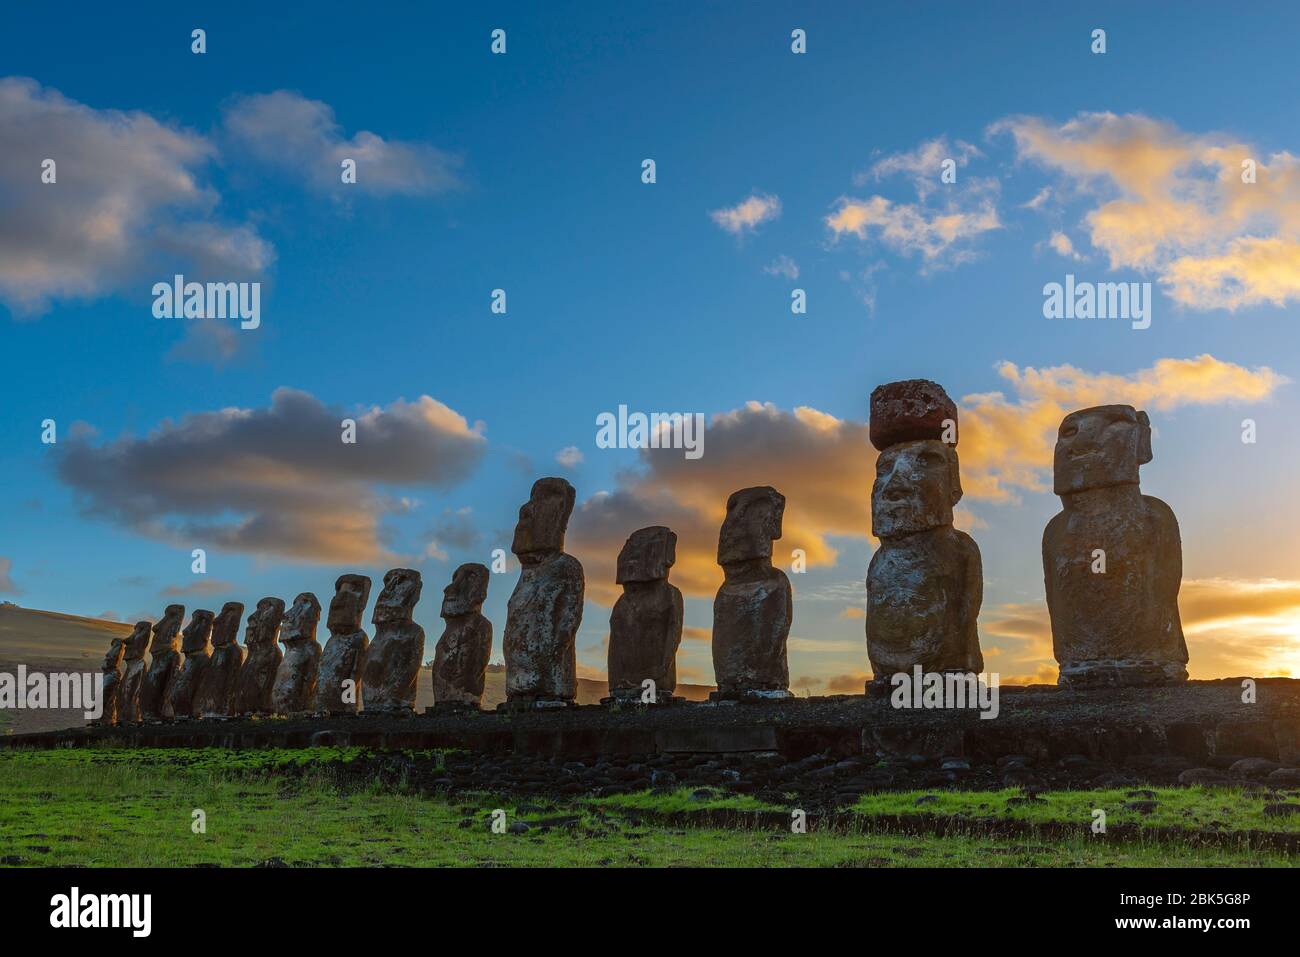 Silhouette von Moai-Statuen bei Sonnenaufgang, Ahu Tongariki, Osterinsel (Rapa Nui), Chile. Stockfoto